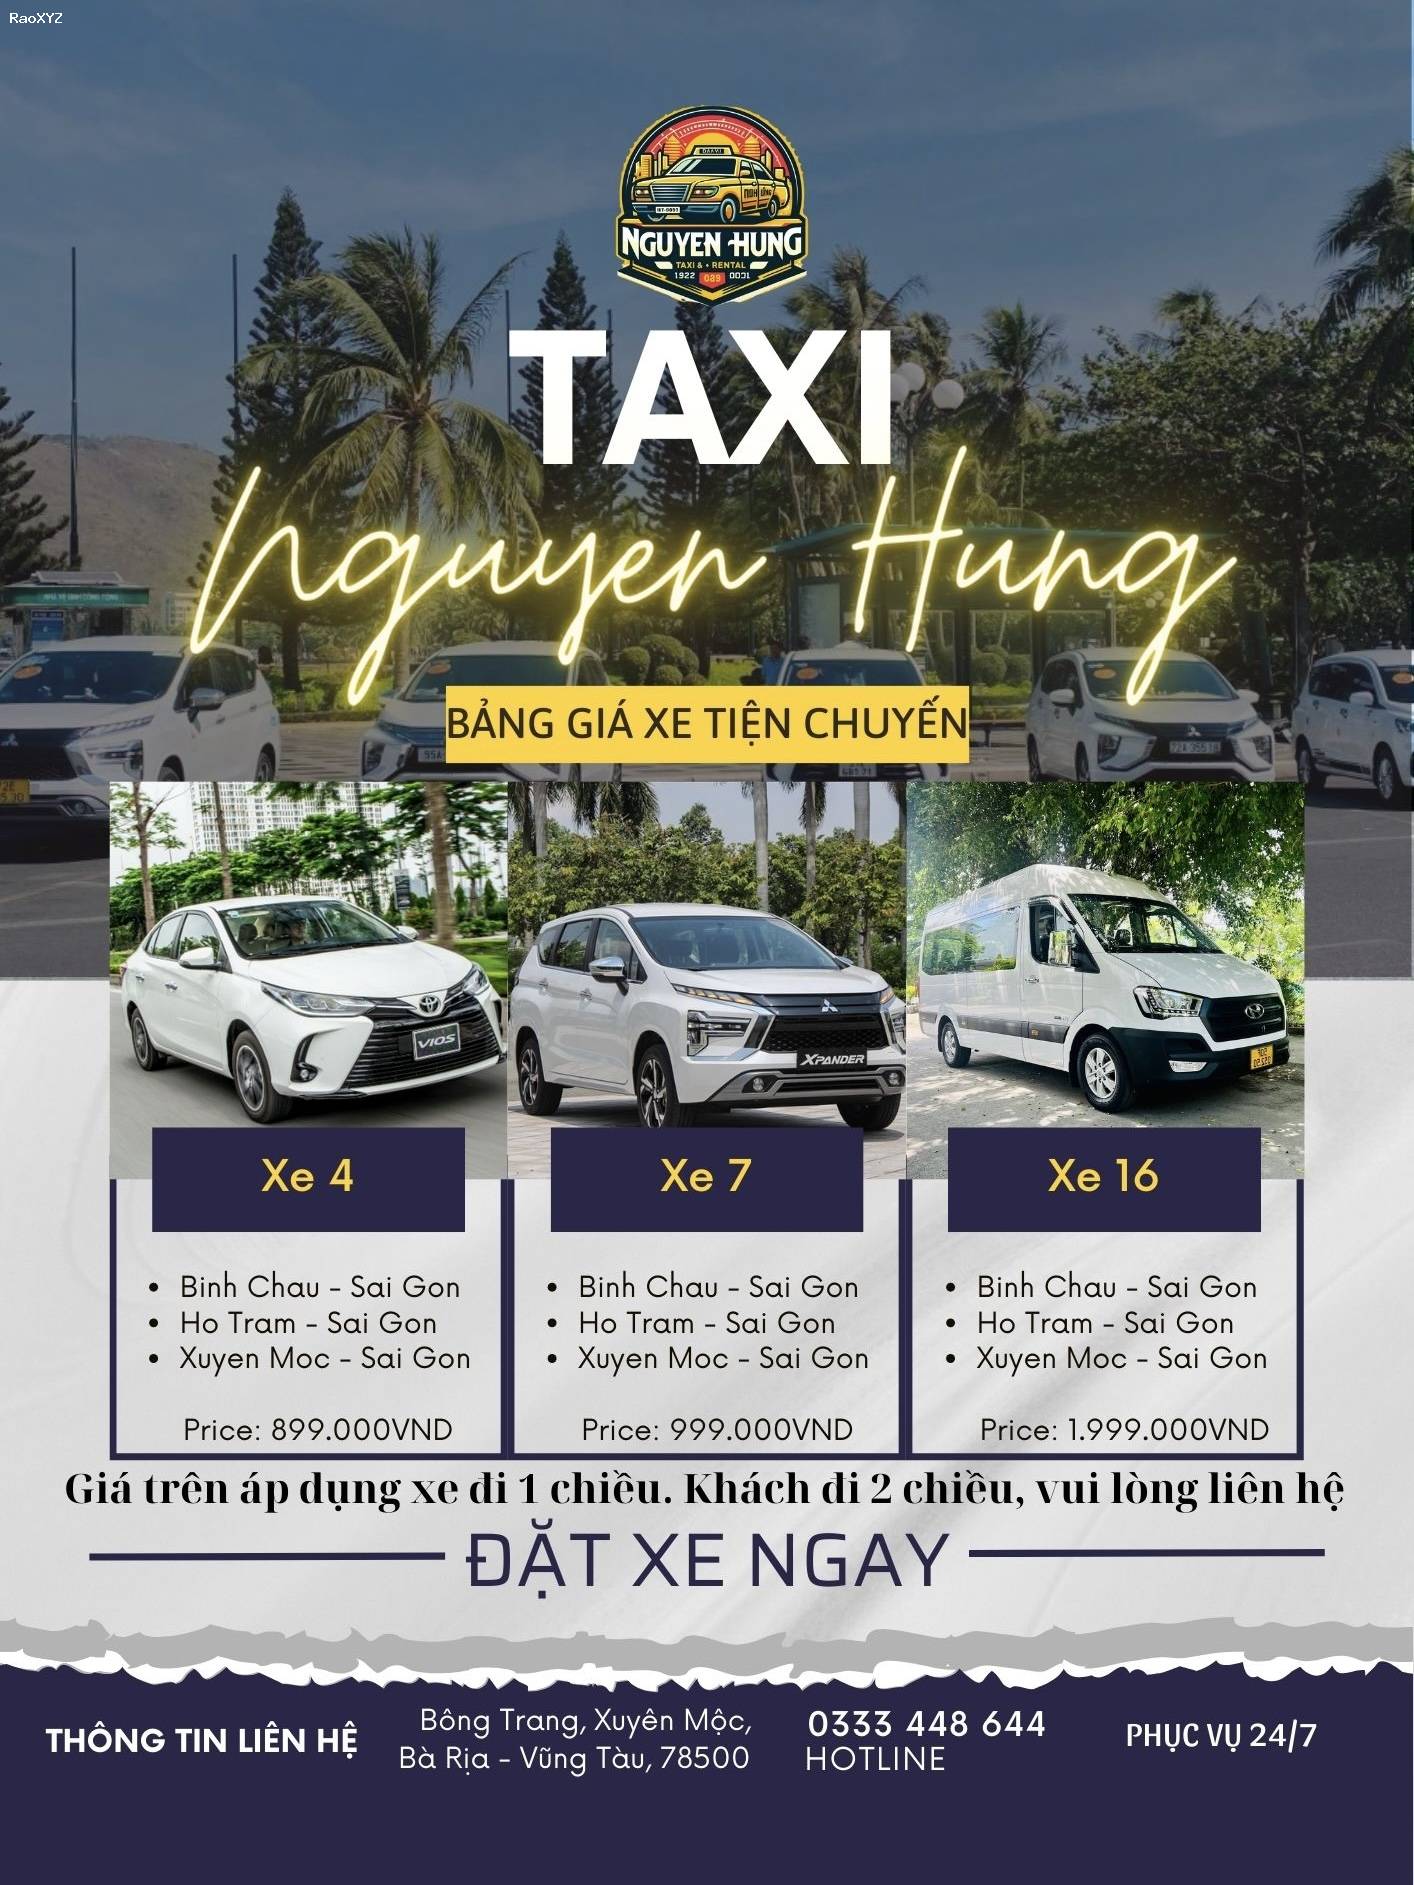 Taxi Hồ Tràm - Taxi Giá Rẻ Uy Tín #1 Hồ Tràm